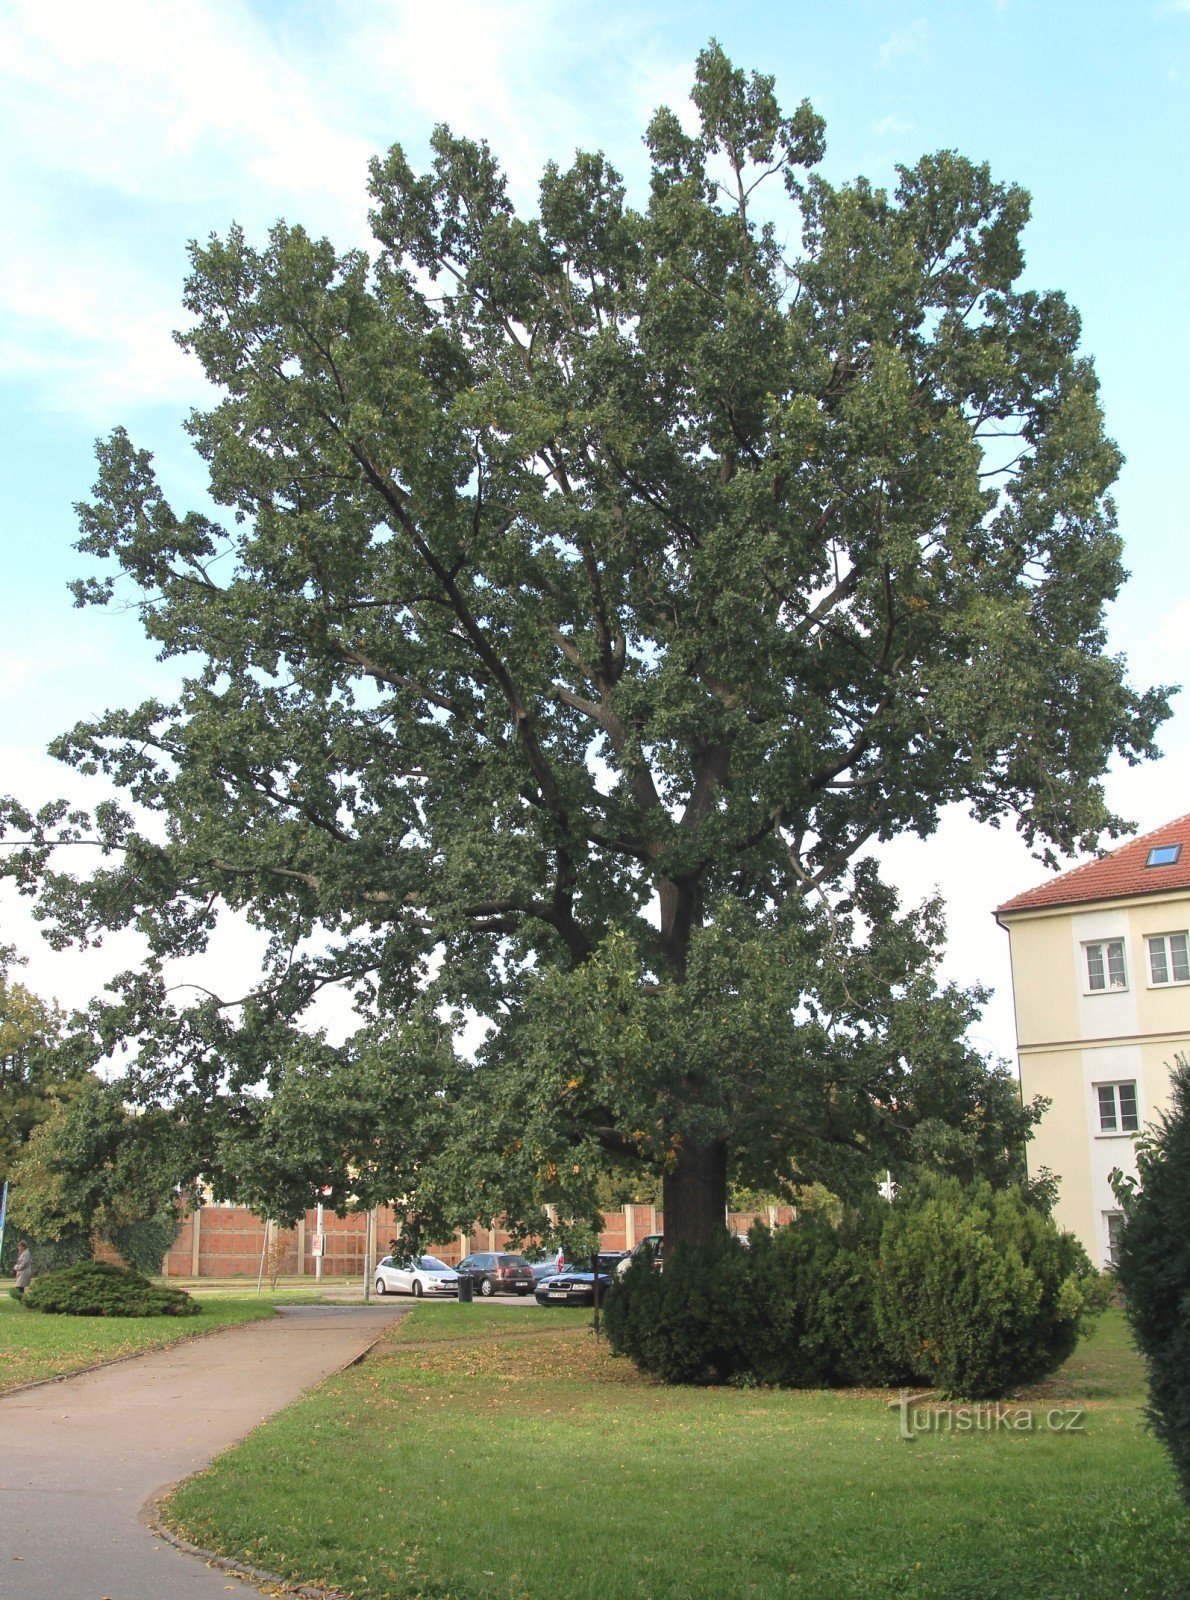 Brno-Komárov - egetræ nær kirken St. Lily